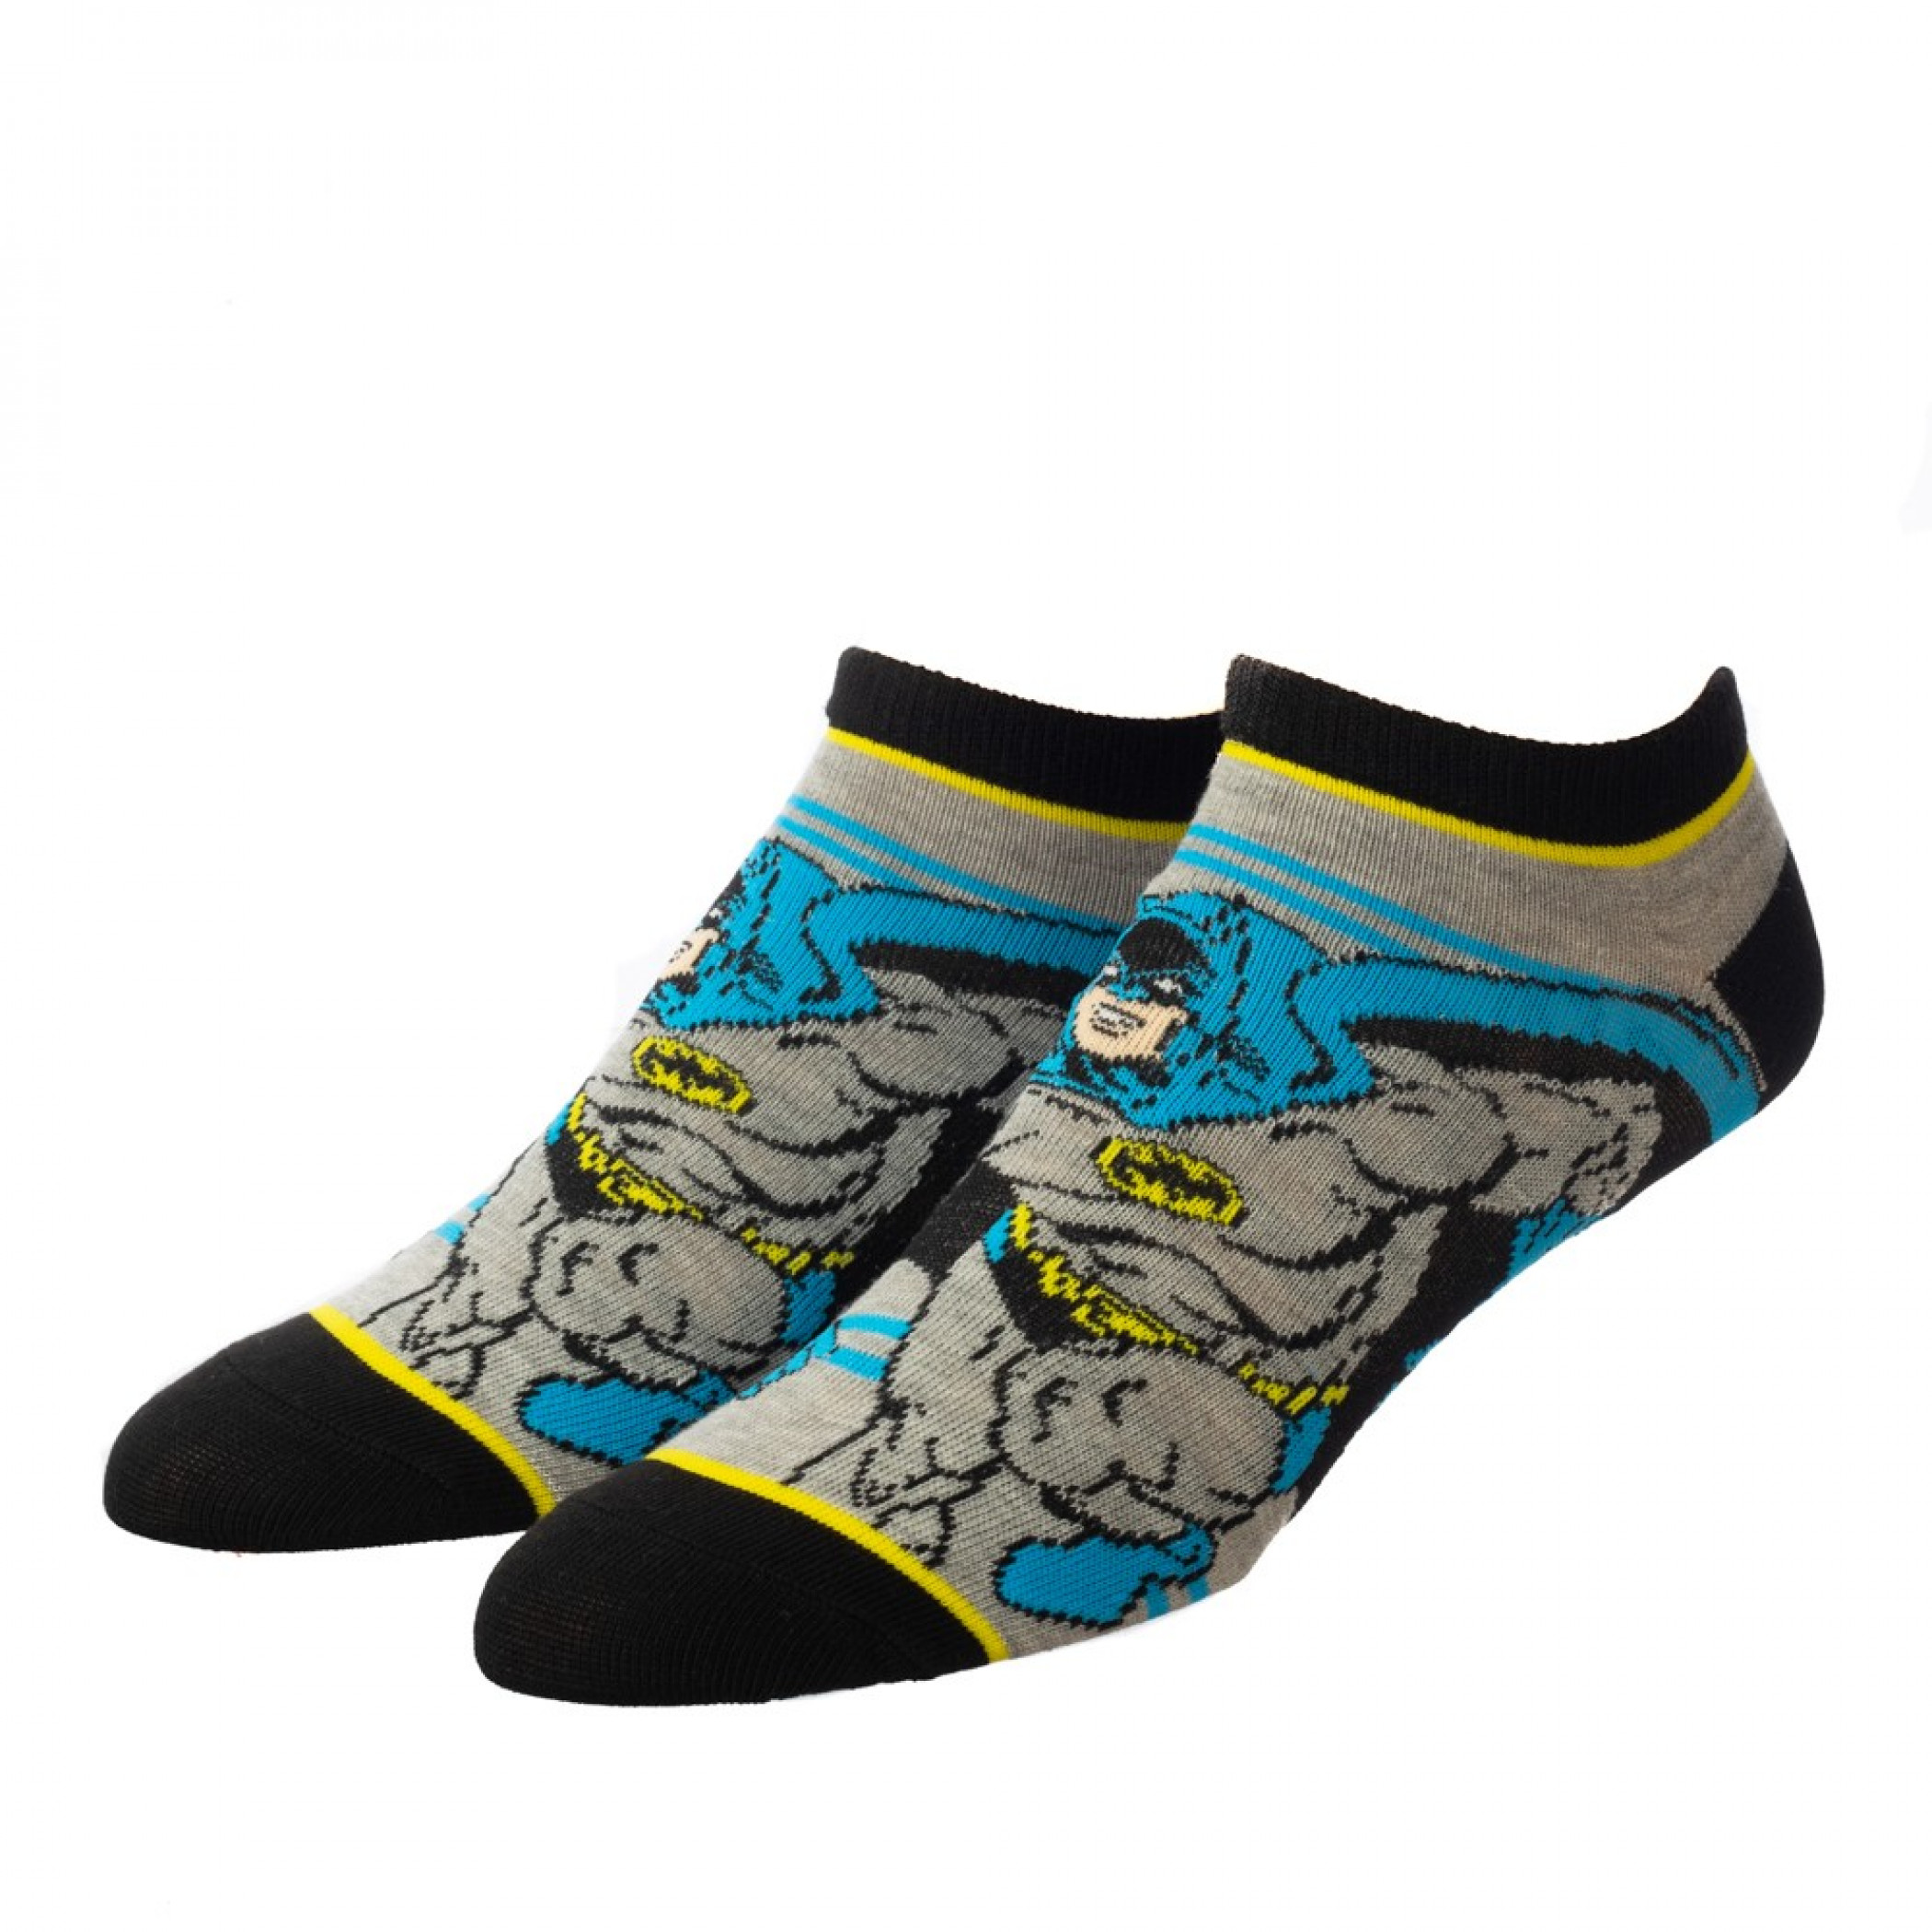 Justice League Hero Characters 5-Pair Pack of Ankle Socks